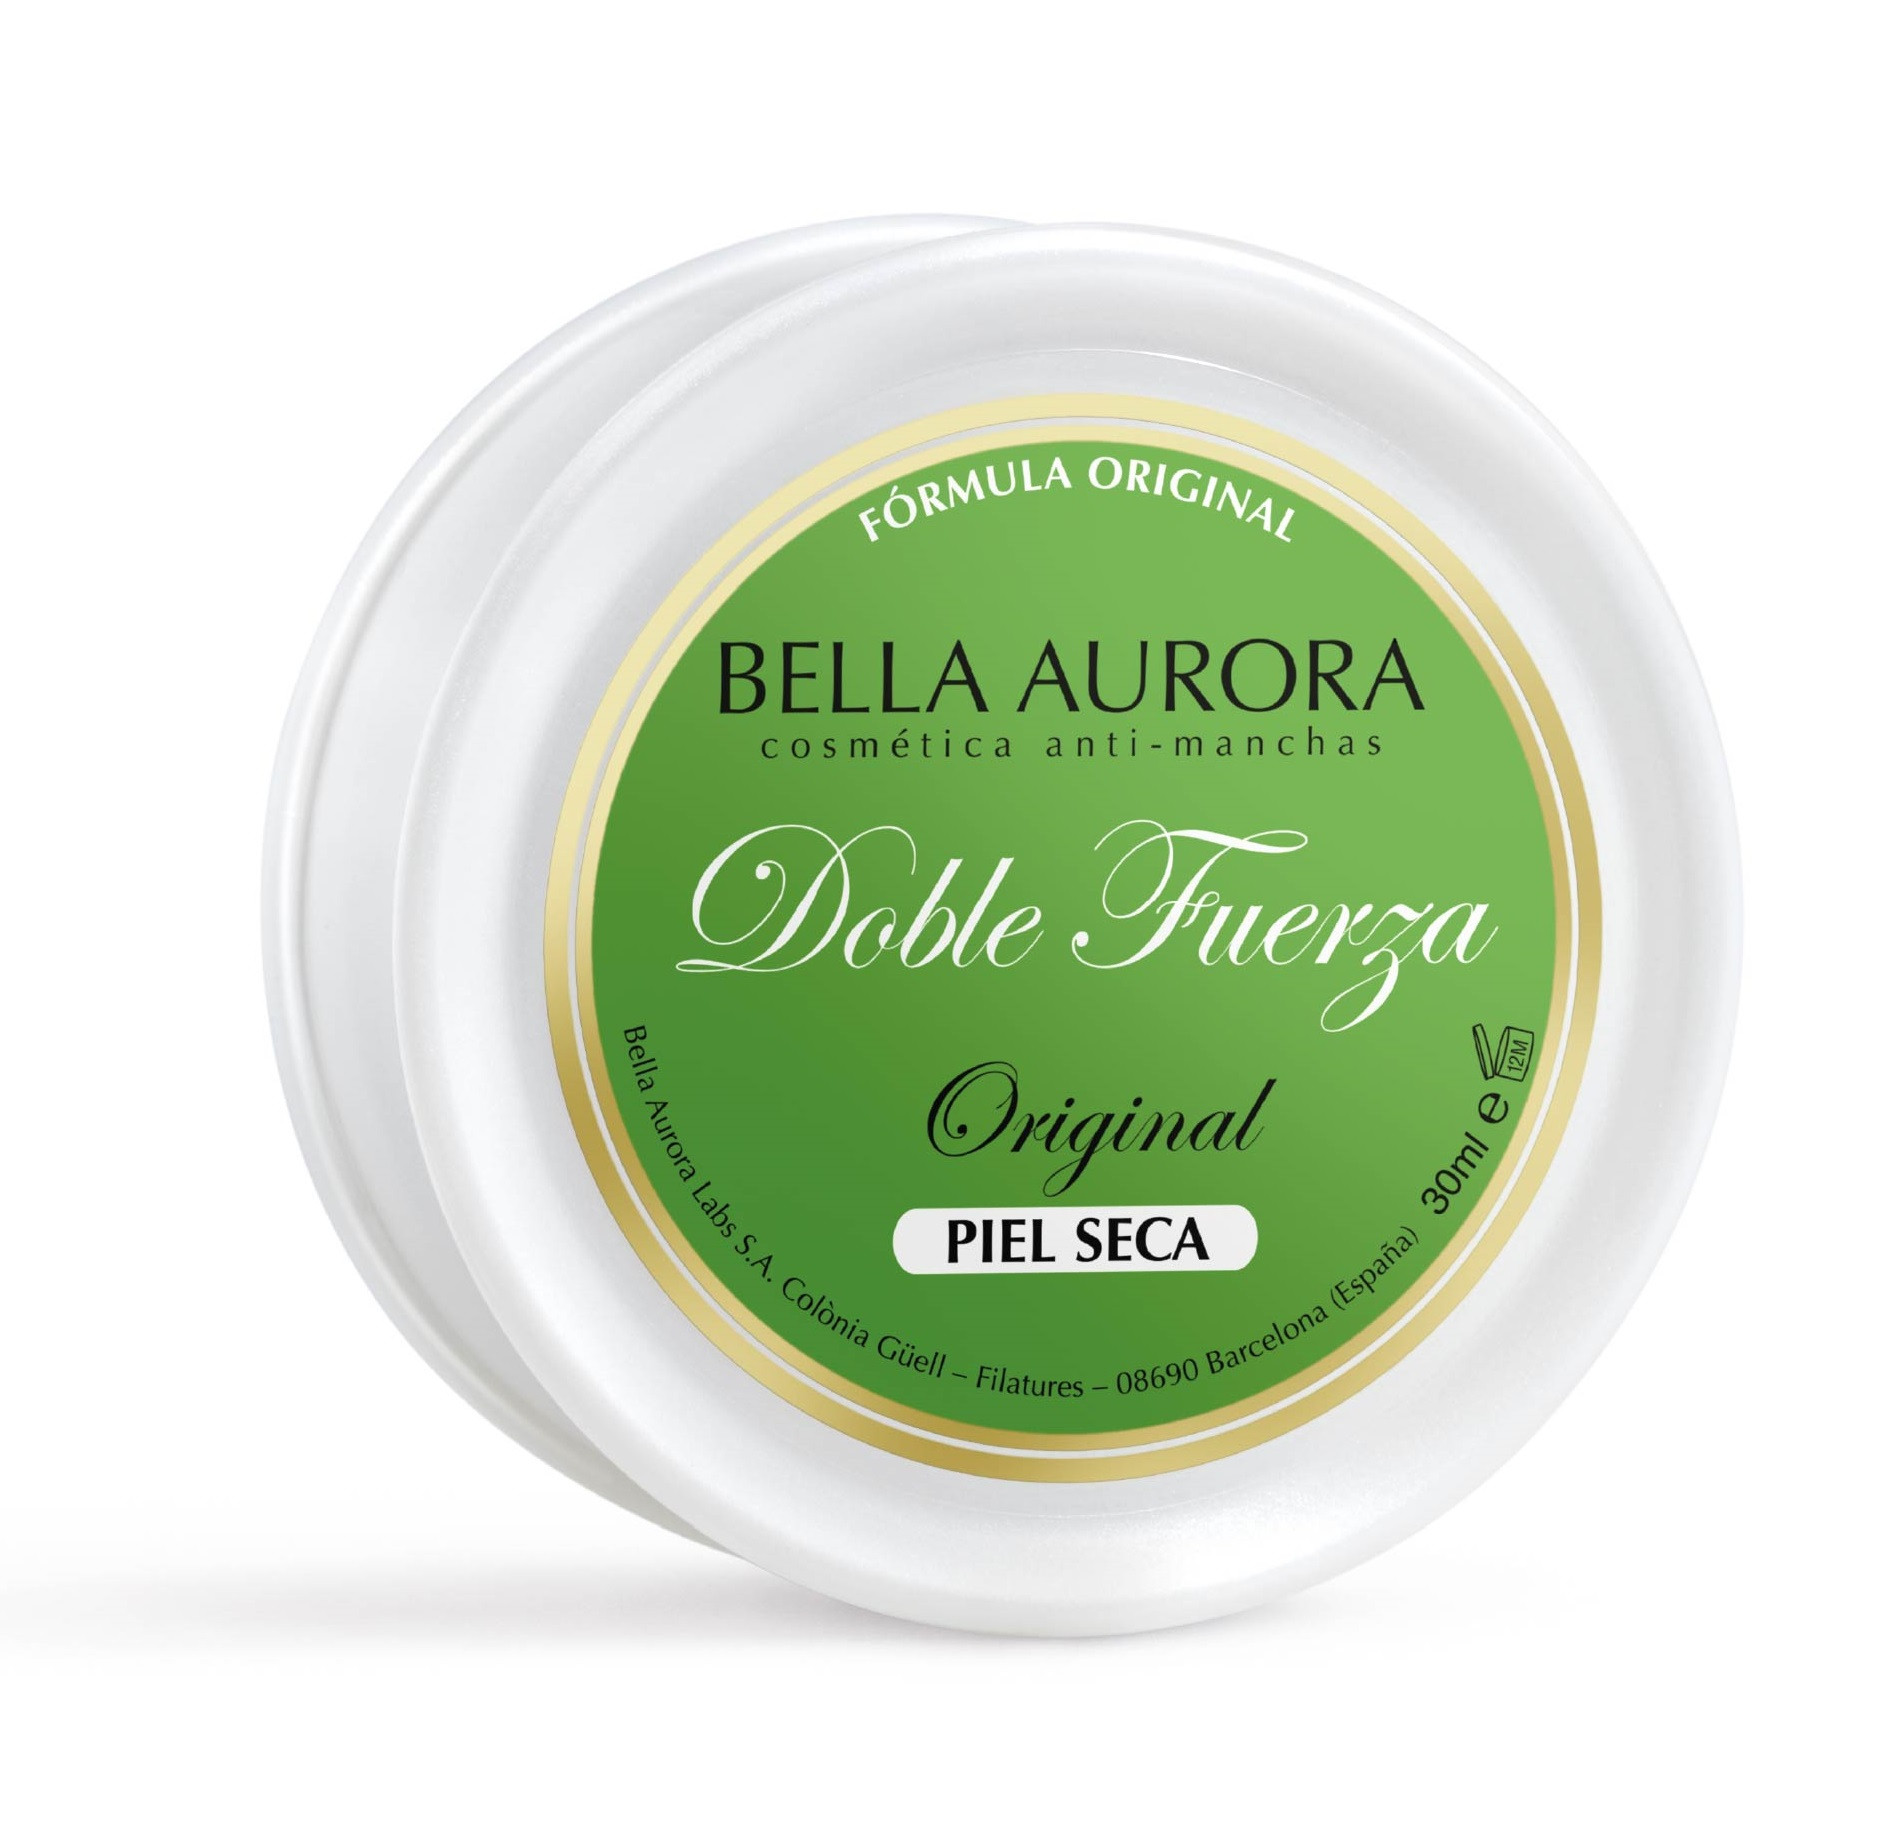 Bella Aurora Protector solar 50+ anti-manchas pieles secas o normales